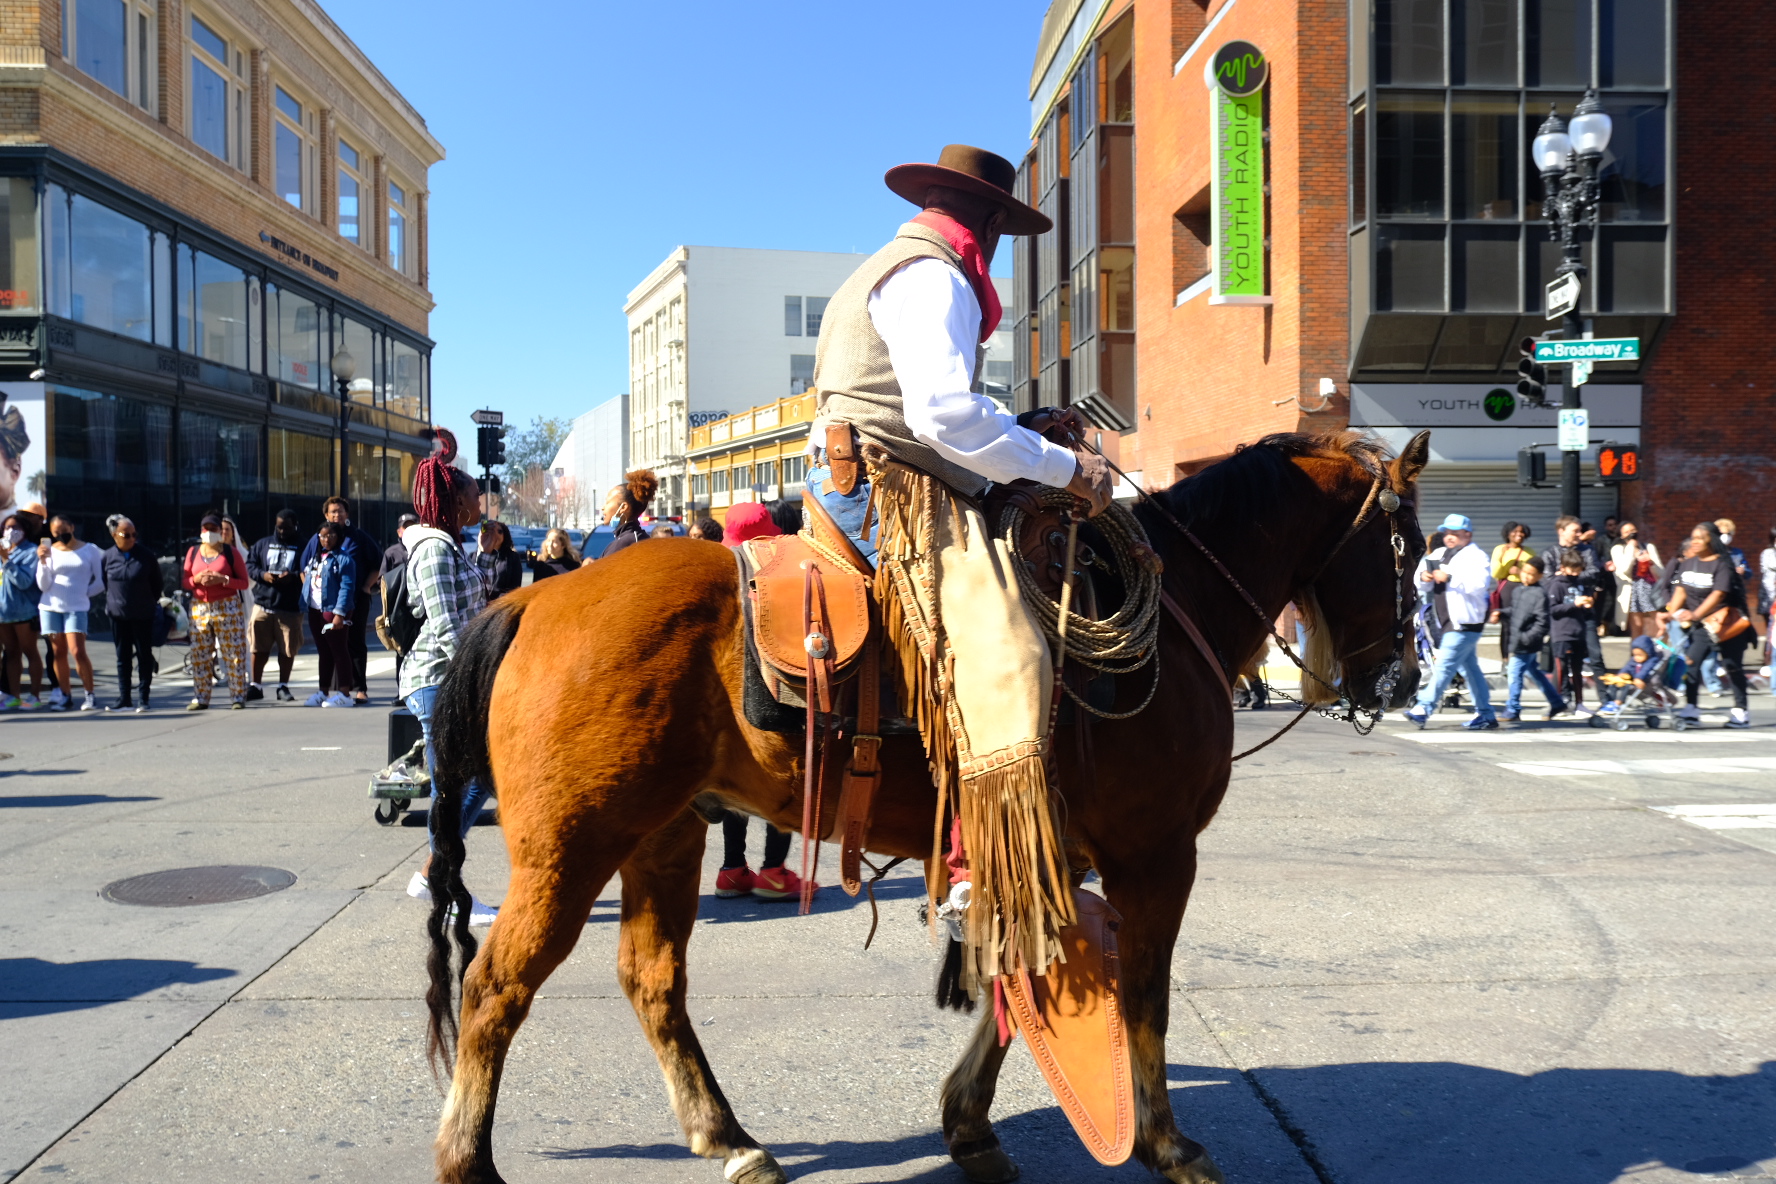 Urban cowboy - Black Joy Parade|Oakland|2022|Urban cowboy at the 2022 Black Joy Parade|#blackfutures, #blackjoy